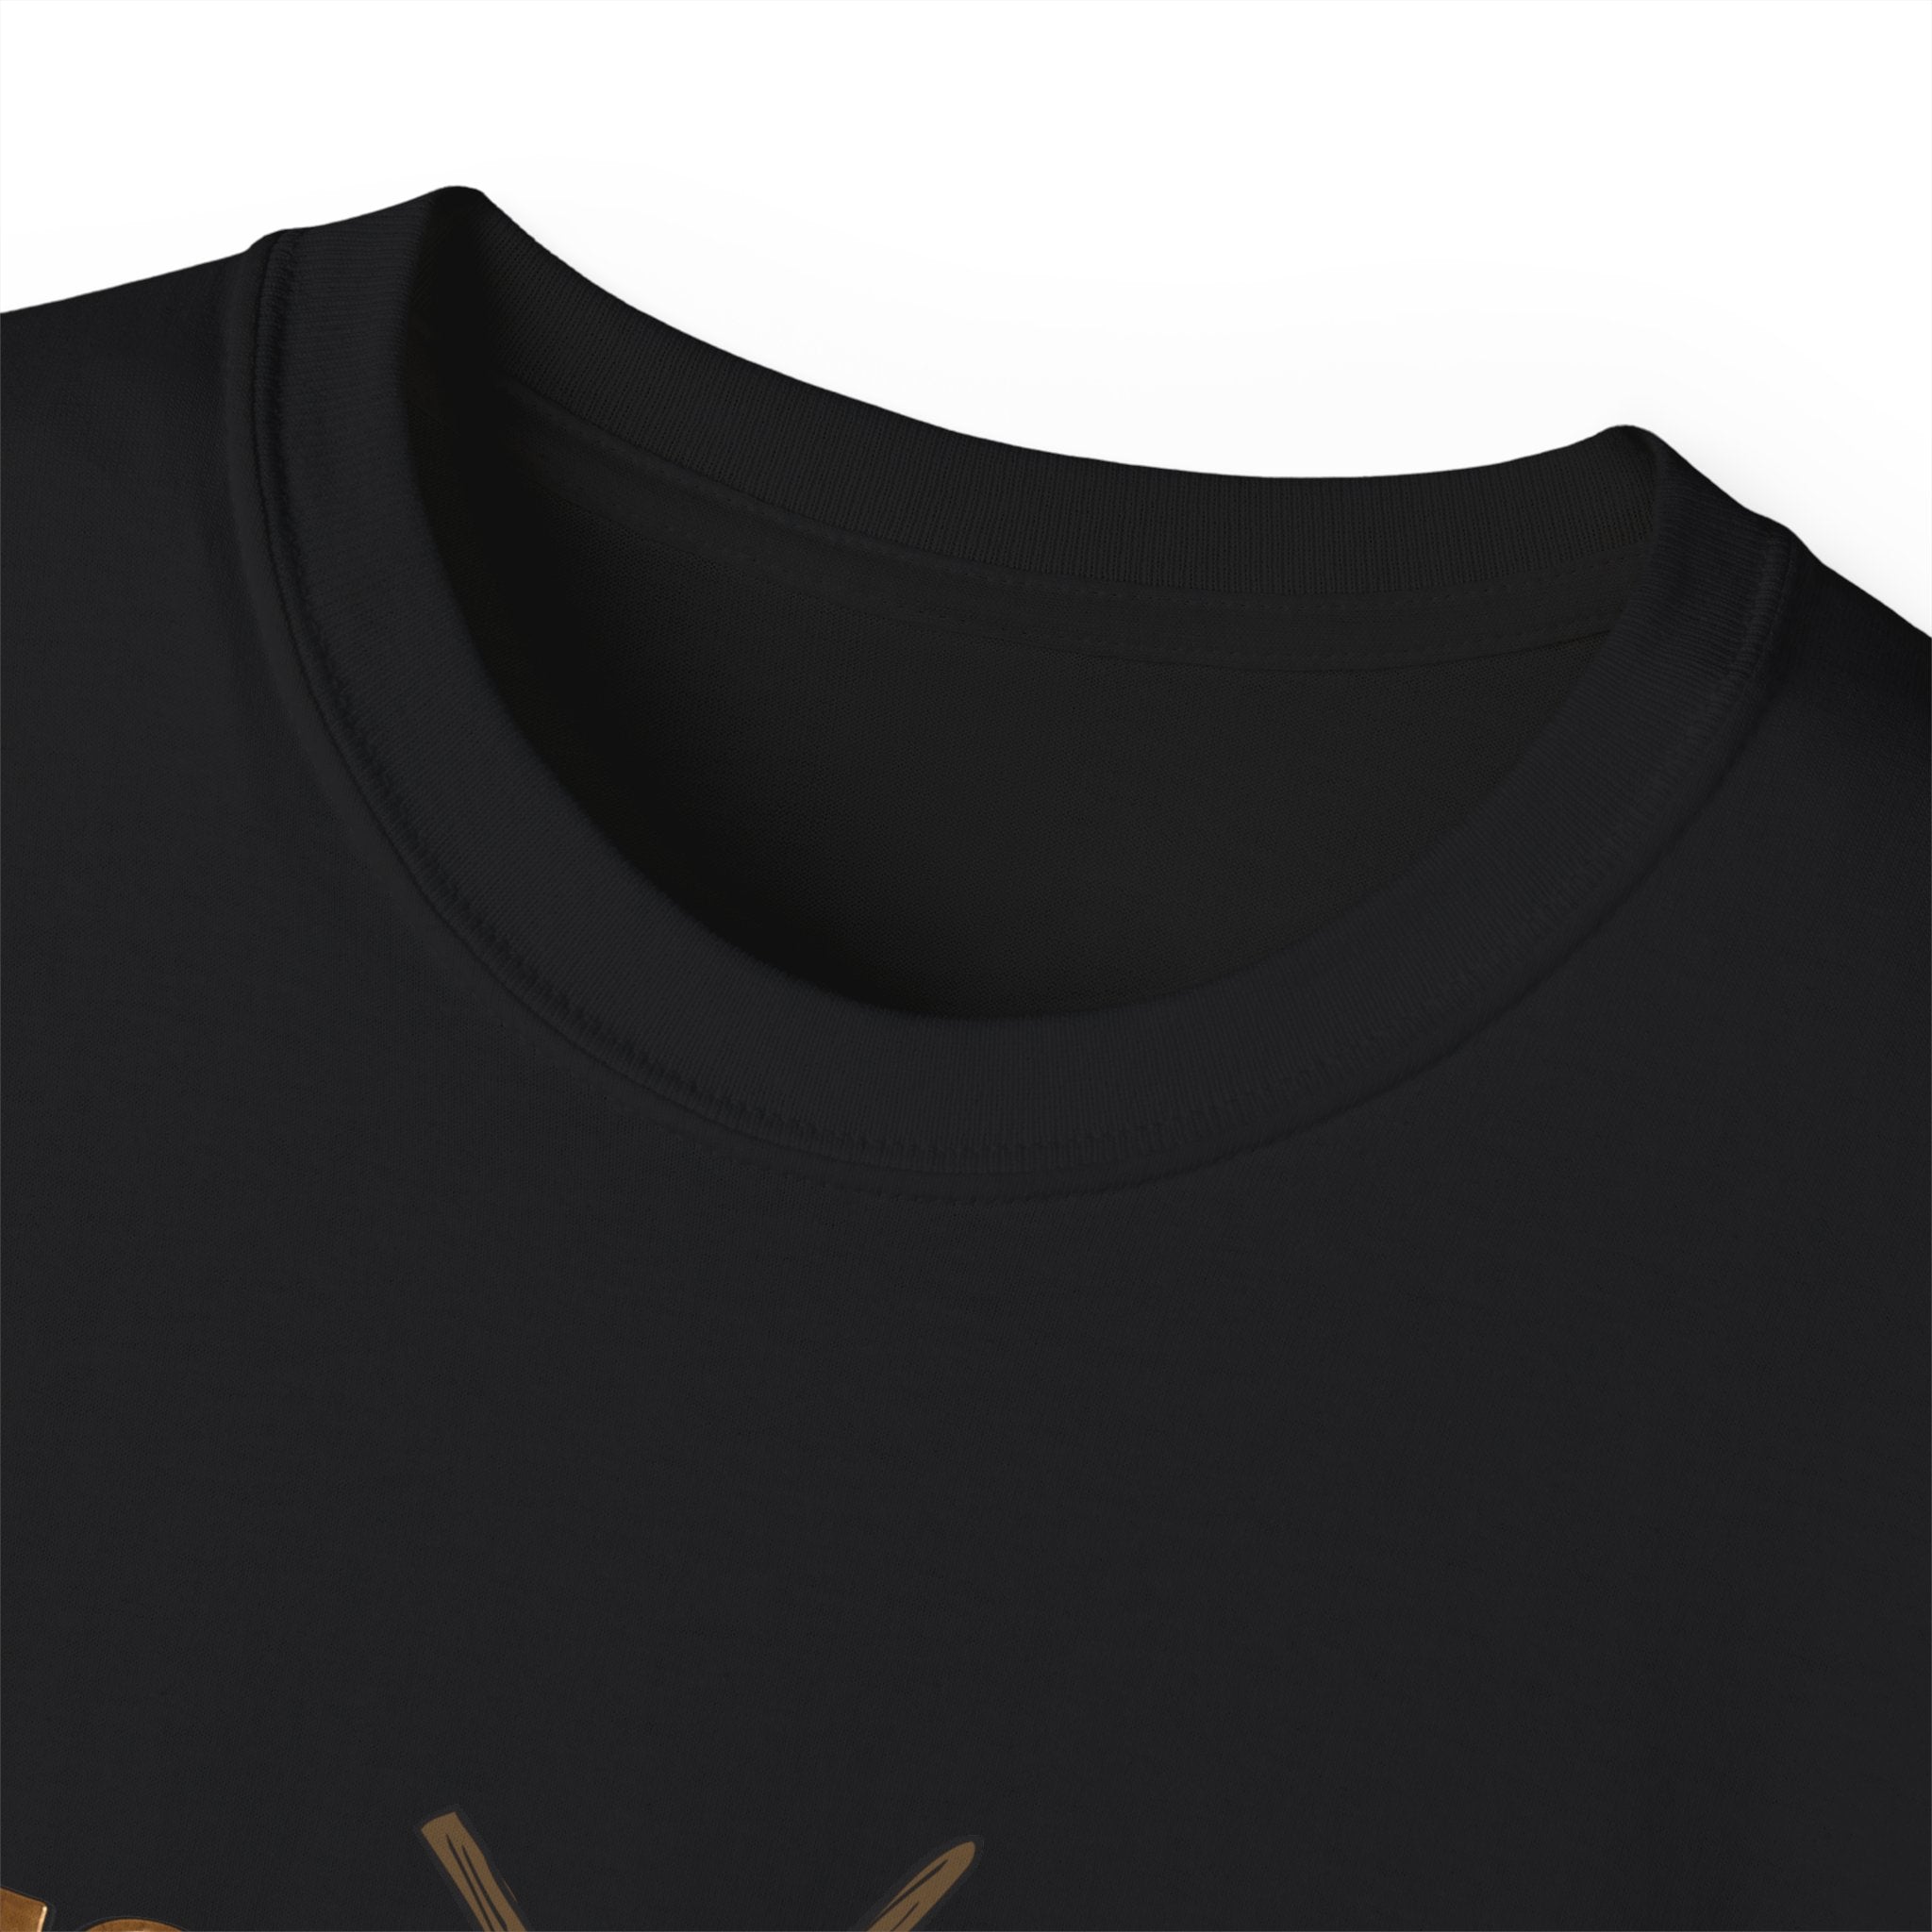 GPAA Logo T-Shirt - S - 5XL